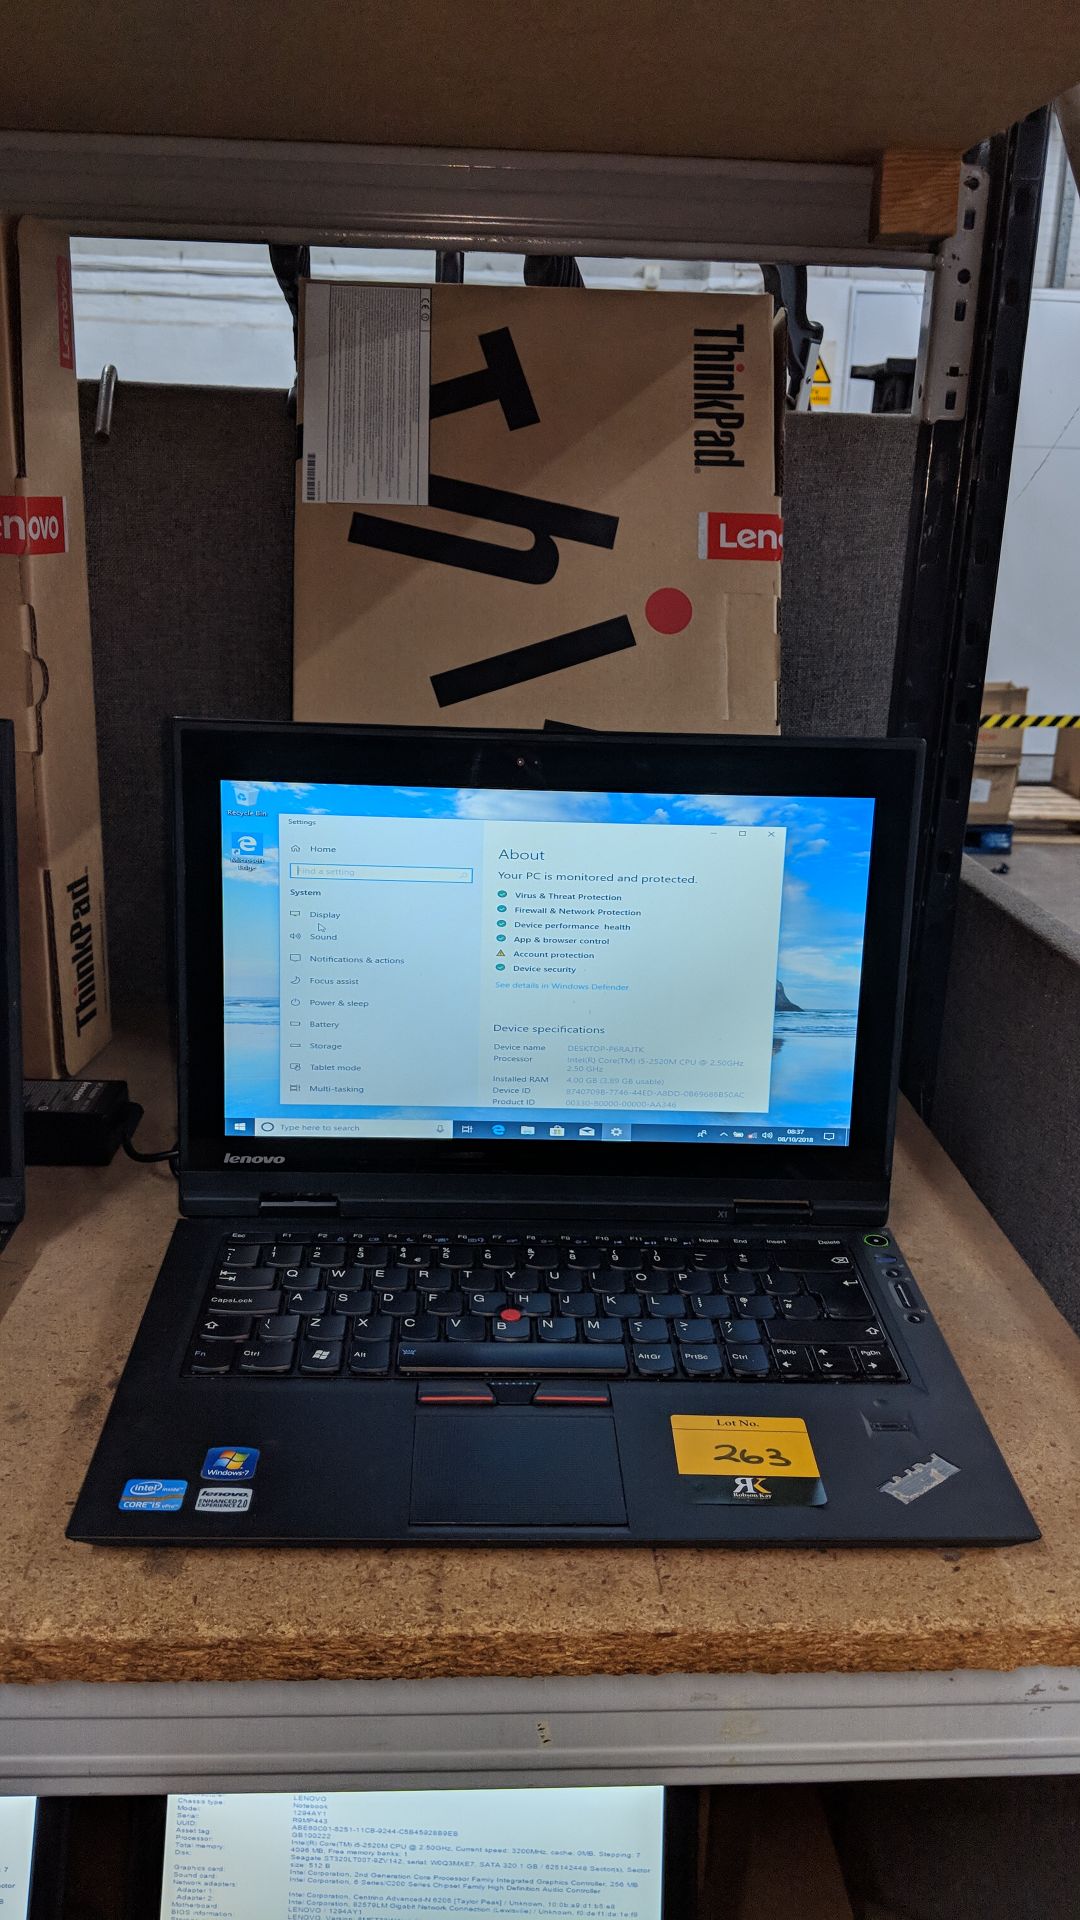 Lenovo ThinkPad notebook computer model 1294AY1. Intel Core i5-2520M CPU@2.5GHz, 4Gb RAM, 320HDD, - Image 2 of 6